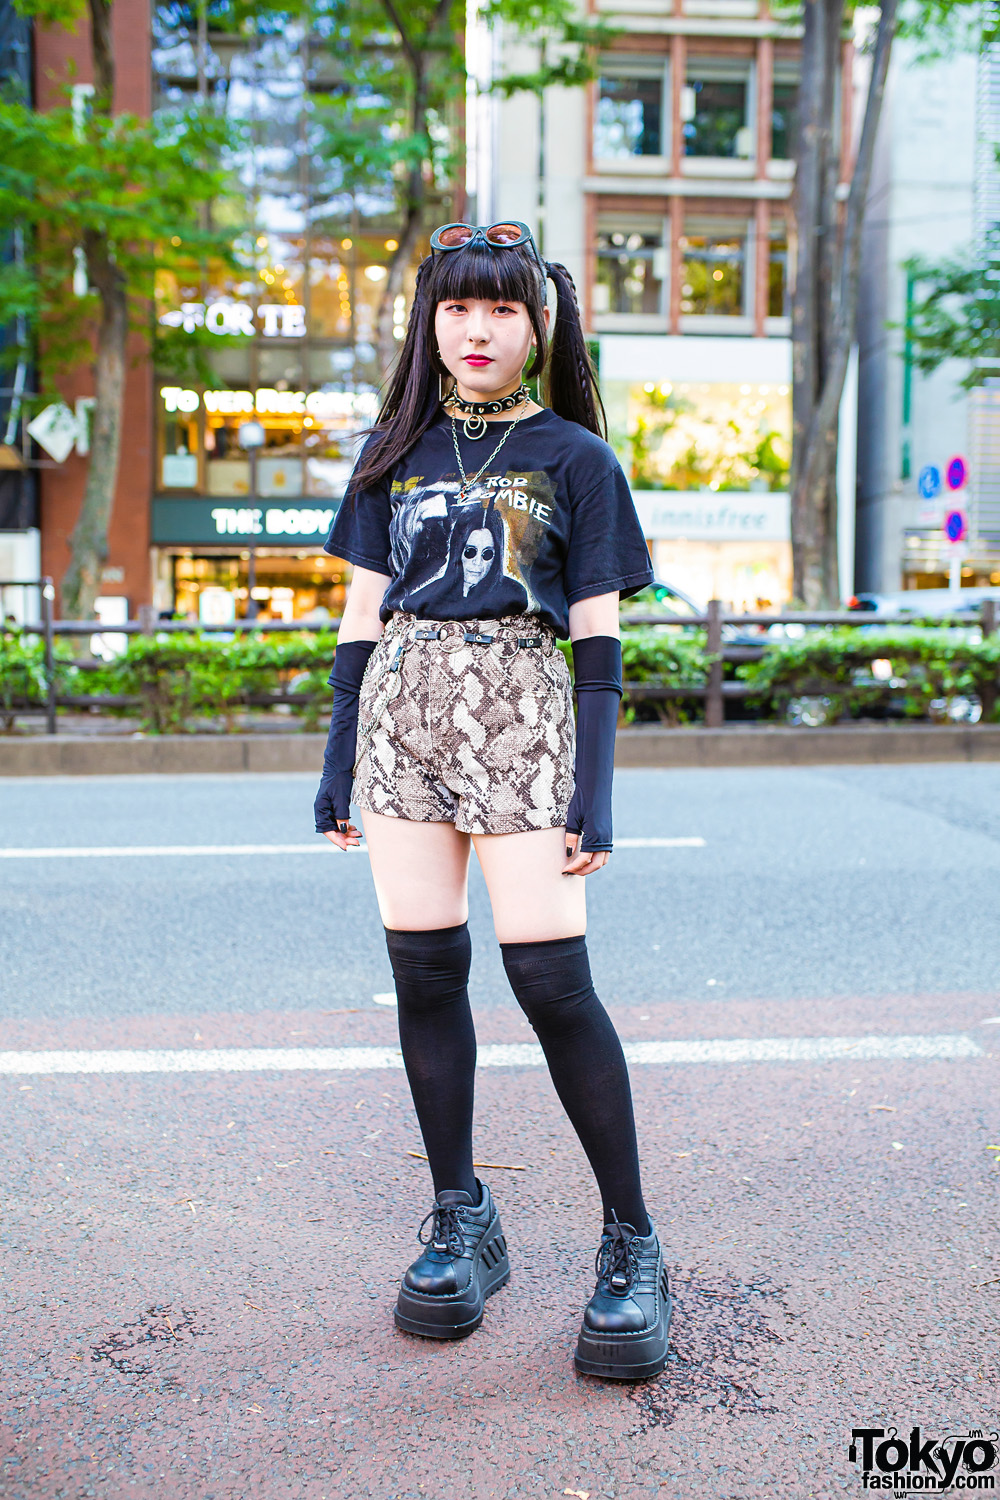 Harajuku Girl Streetwear Look w/ Twin Tails, Rob Zombie Shirt, Snakeskin Shorts, Never Mind the XU & Demonia